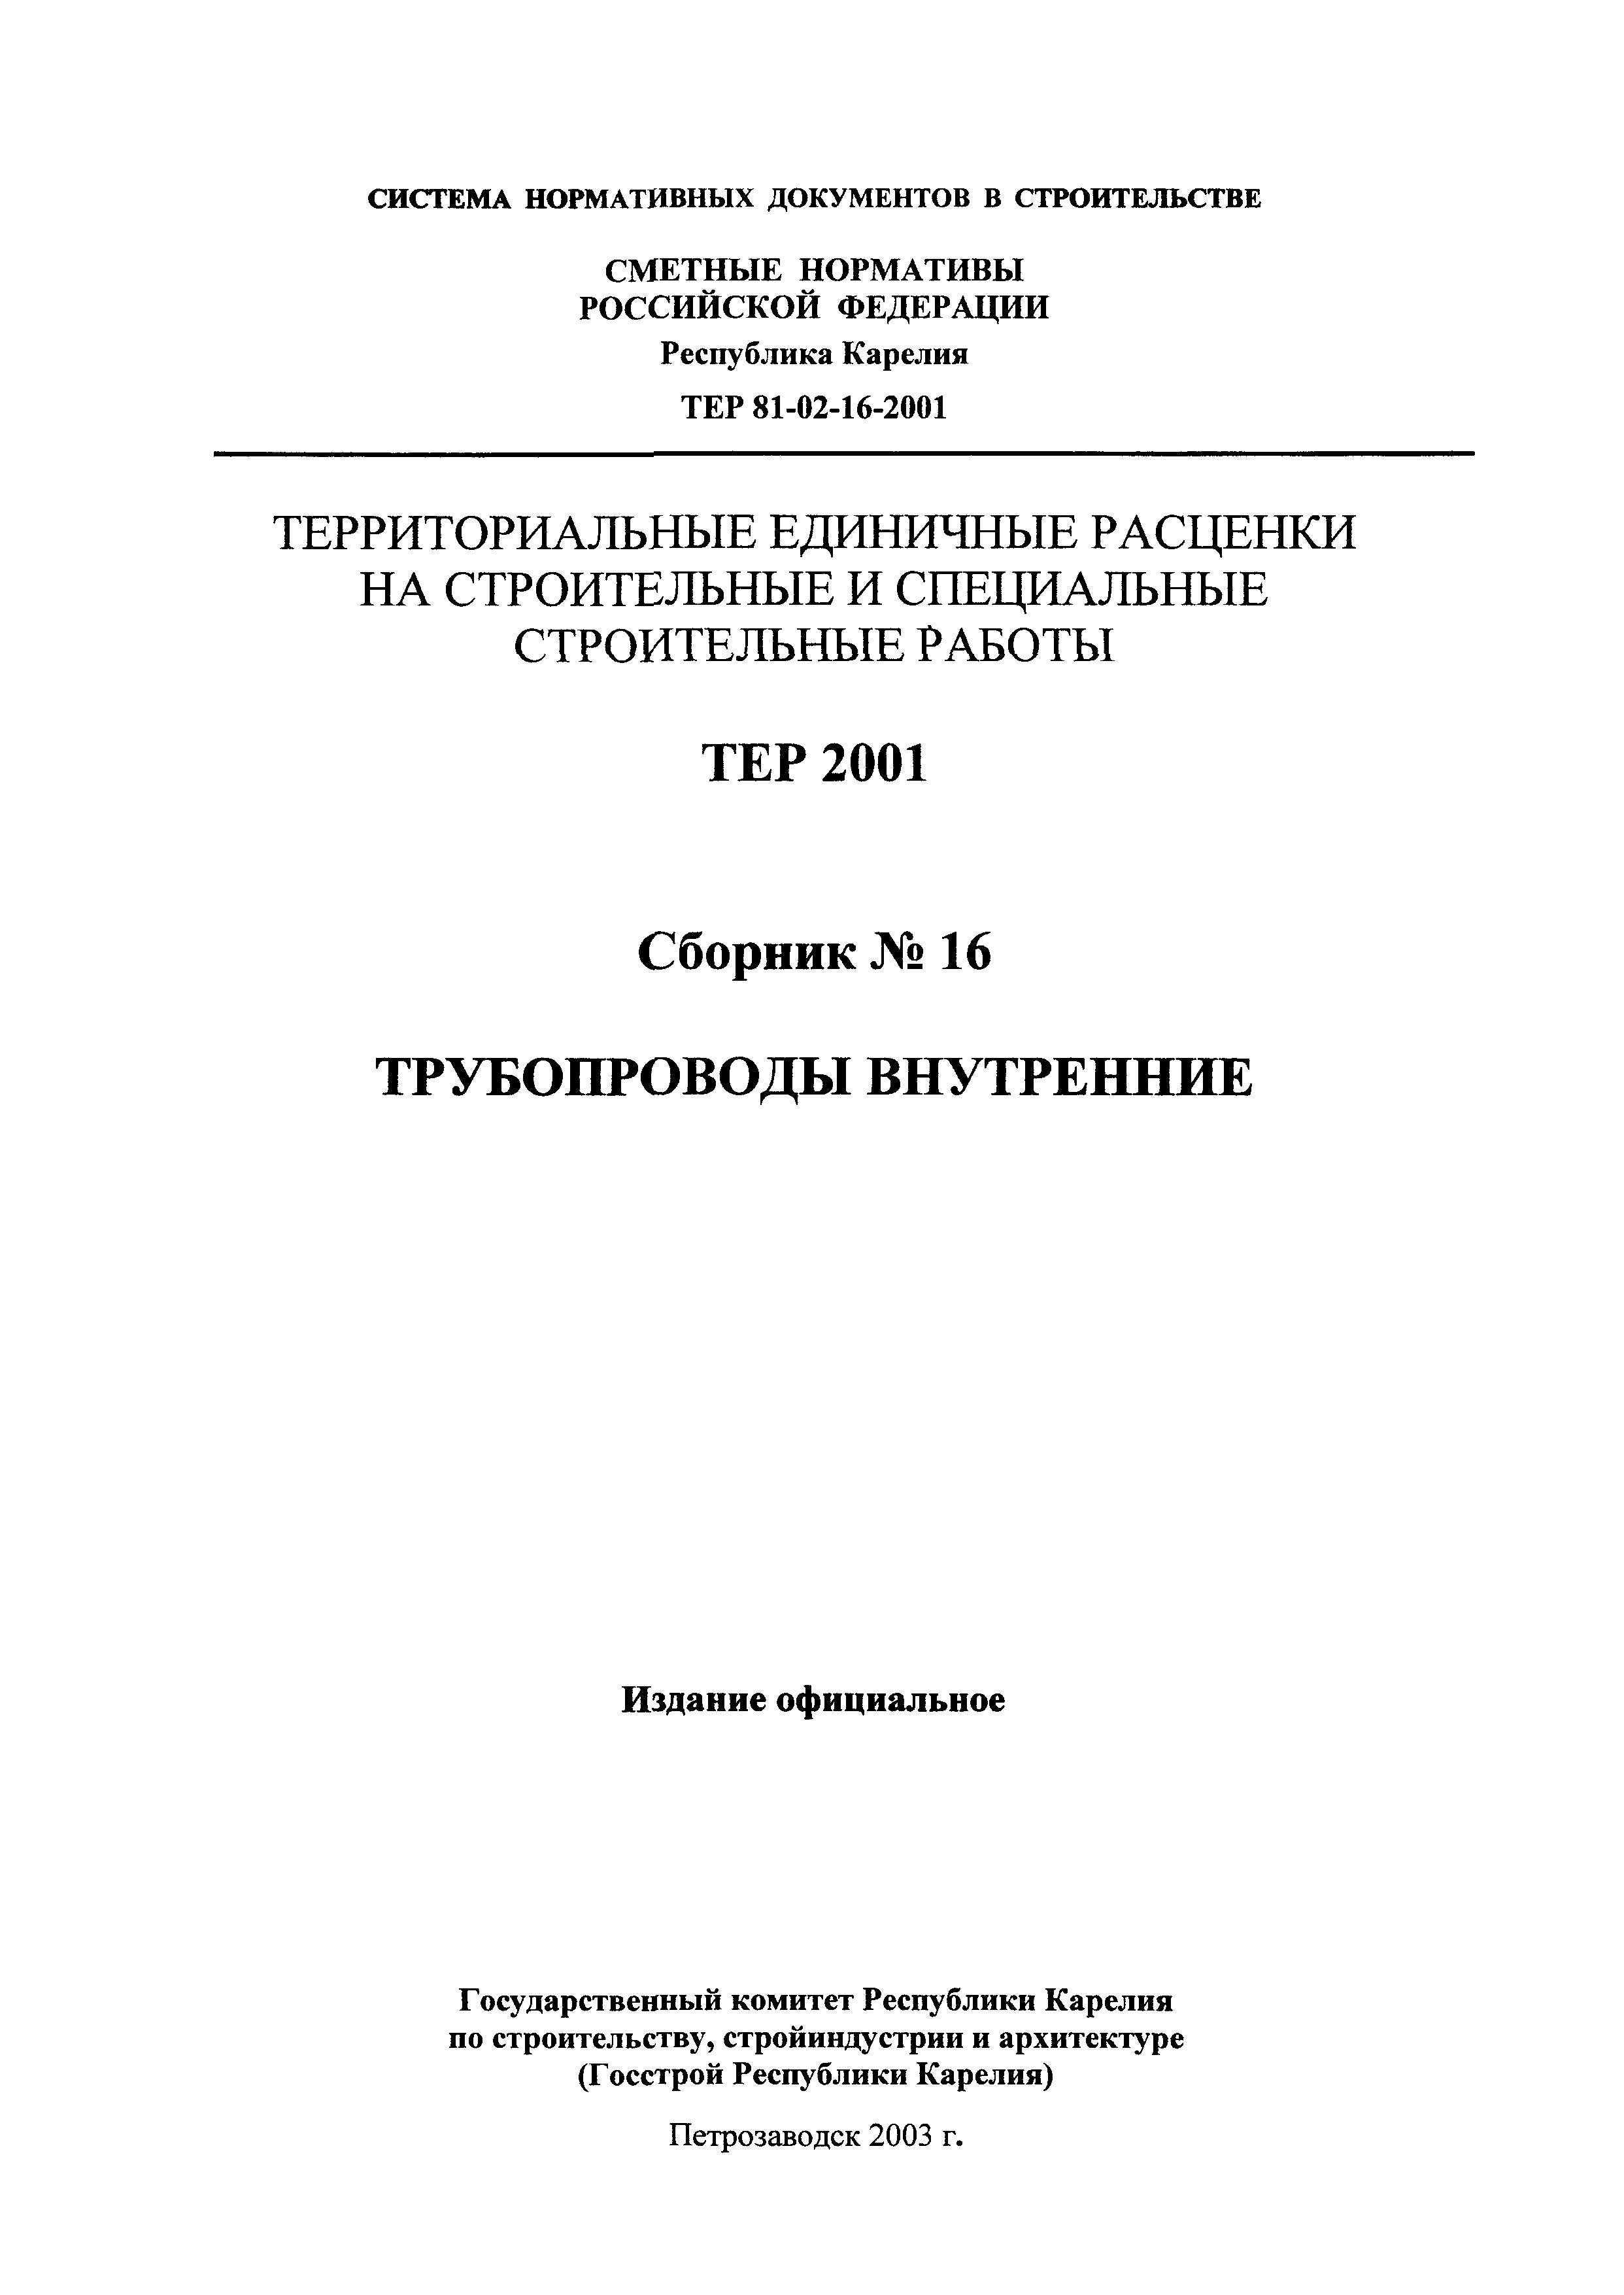 ТЕР Республика Карелия 2001-16